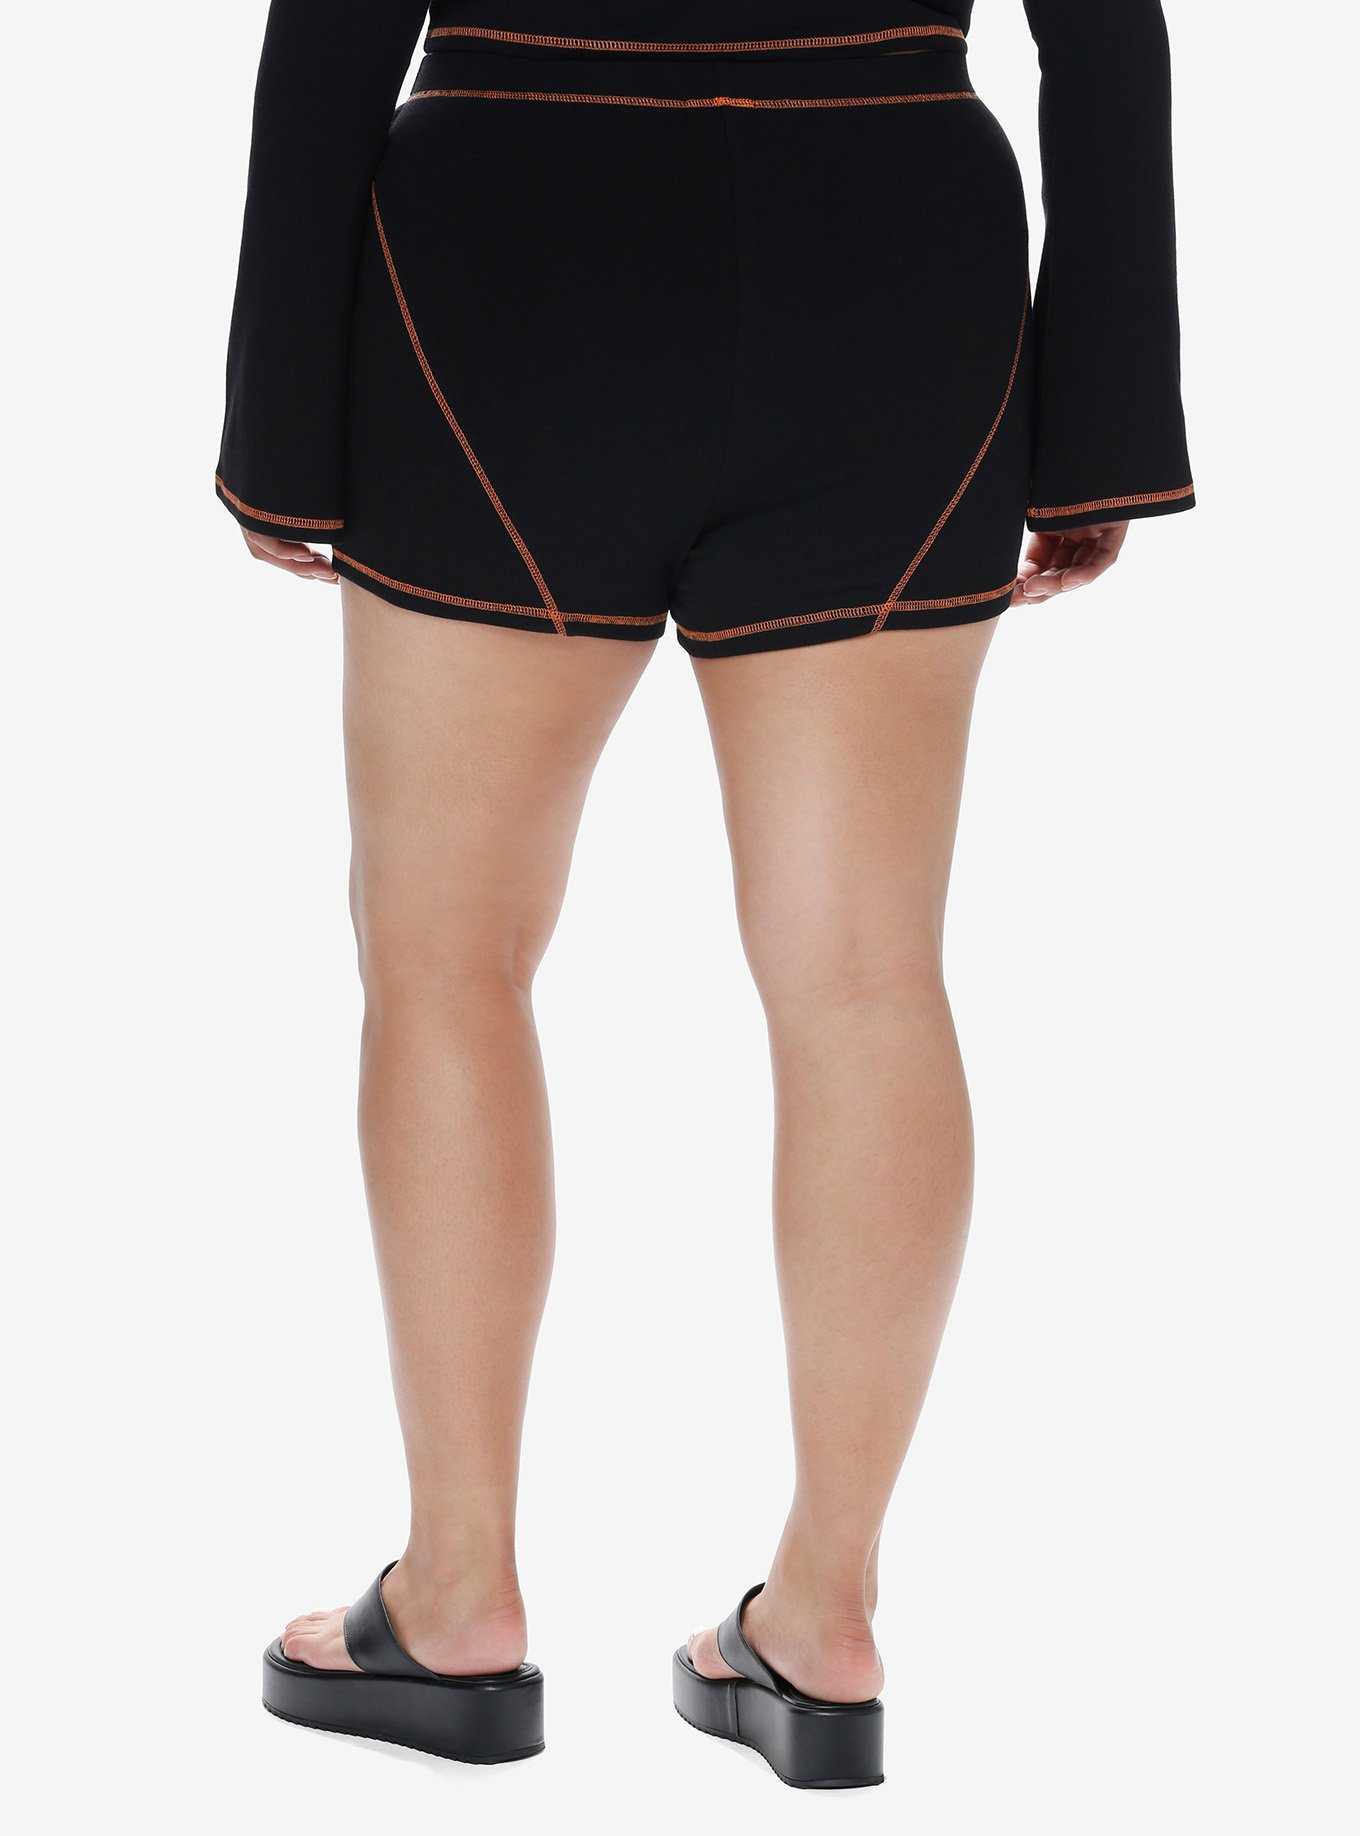 Social Collision Black & Orange Stitch Skull Girls Bike Shorts Plus Size, , hi-res